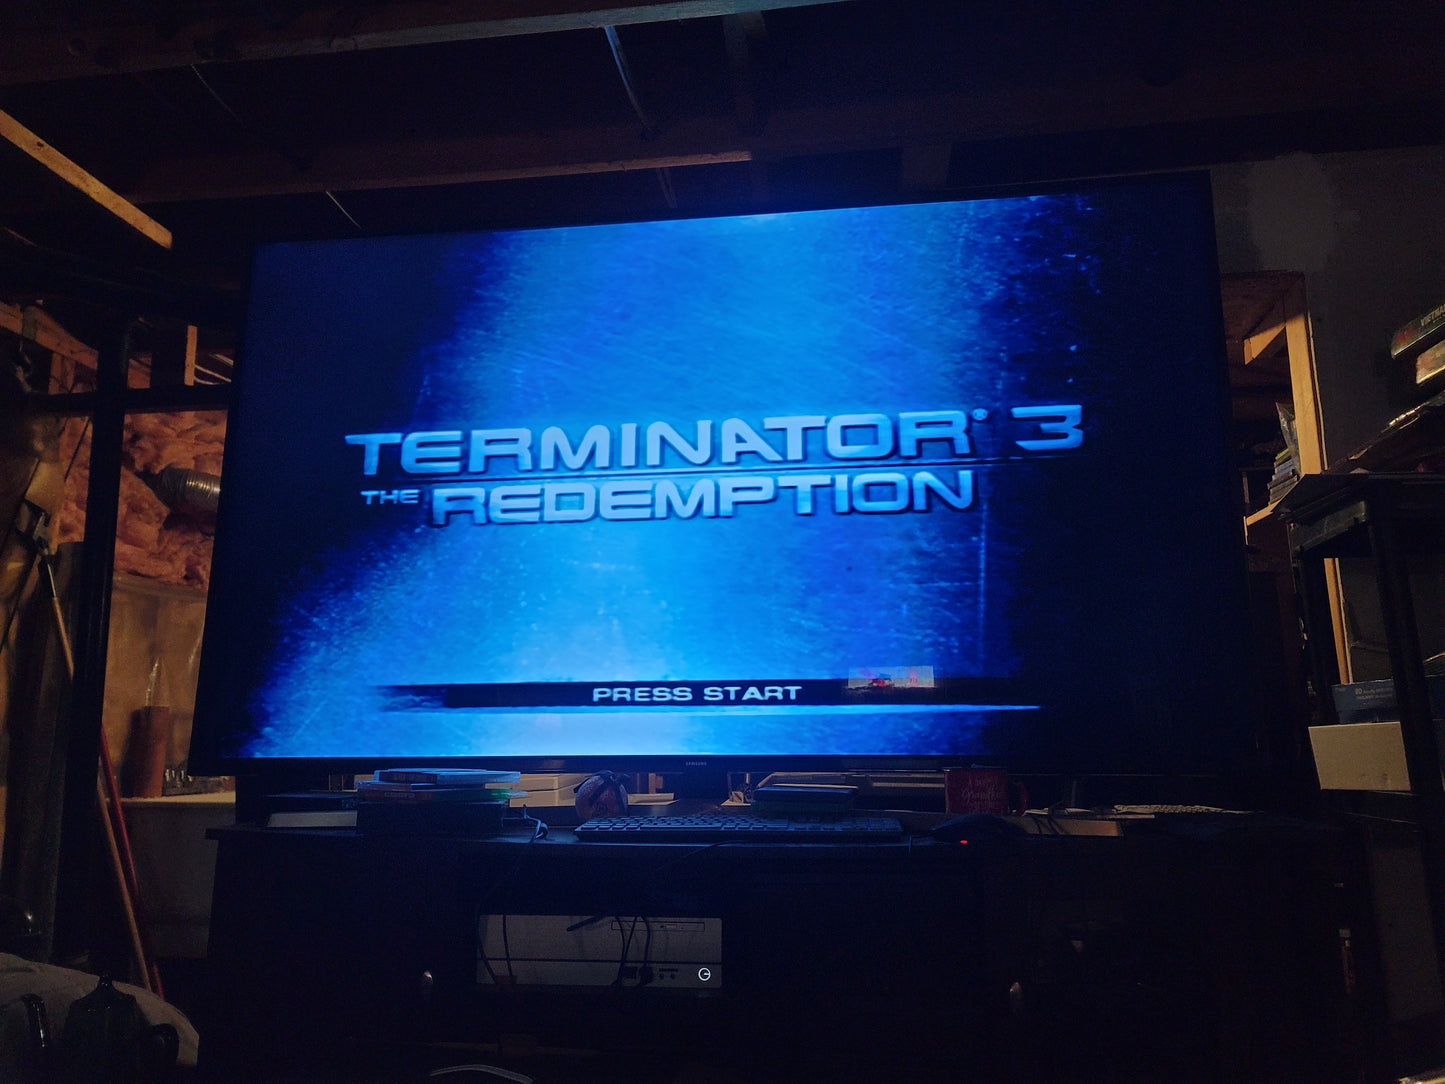 Terminator 3: The Redemption (Nintendo GameCube, 2004)